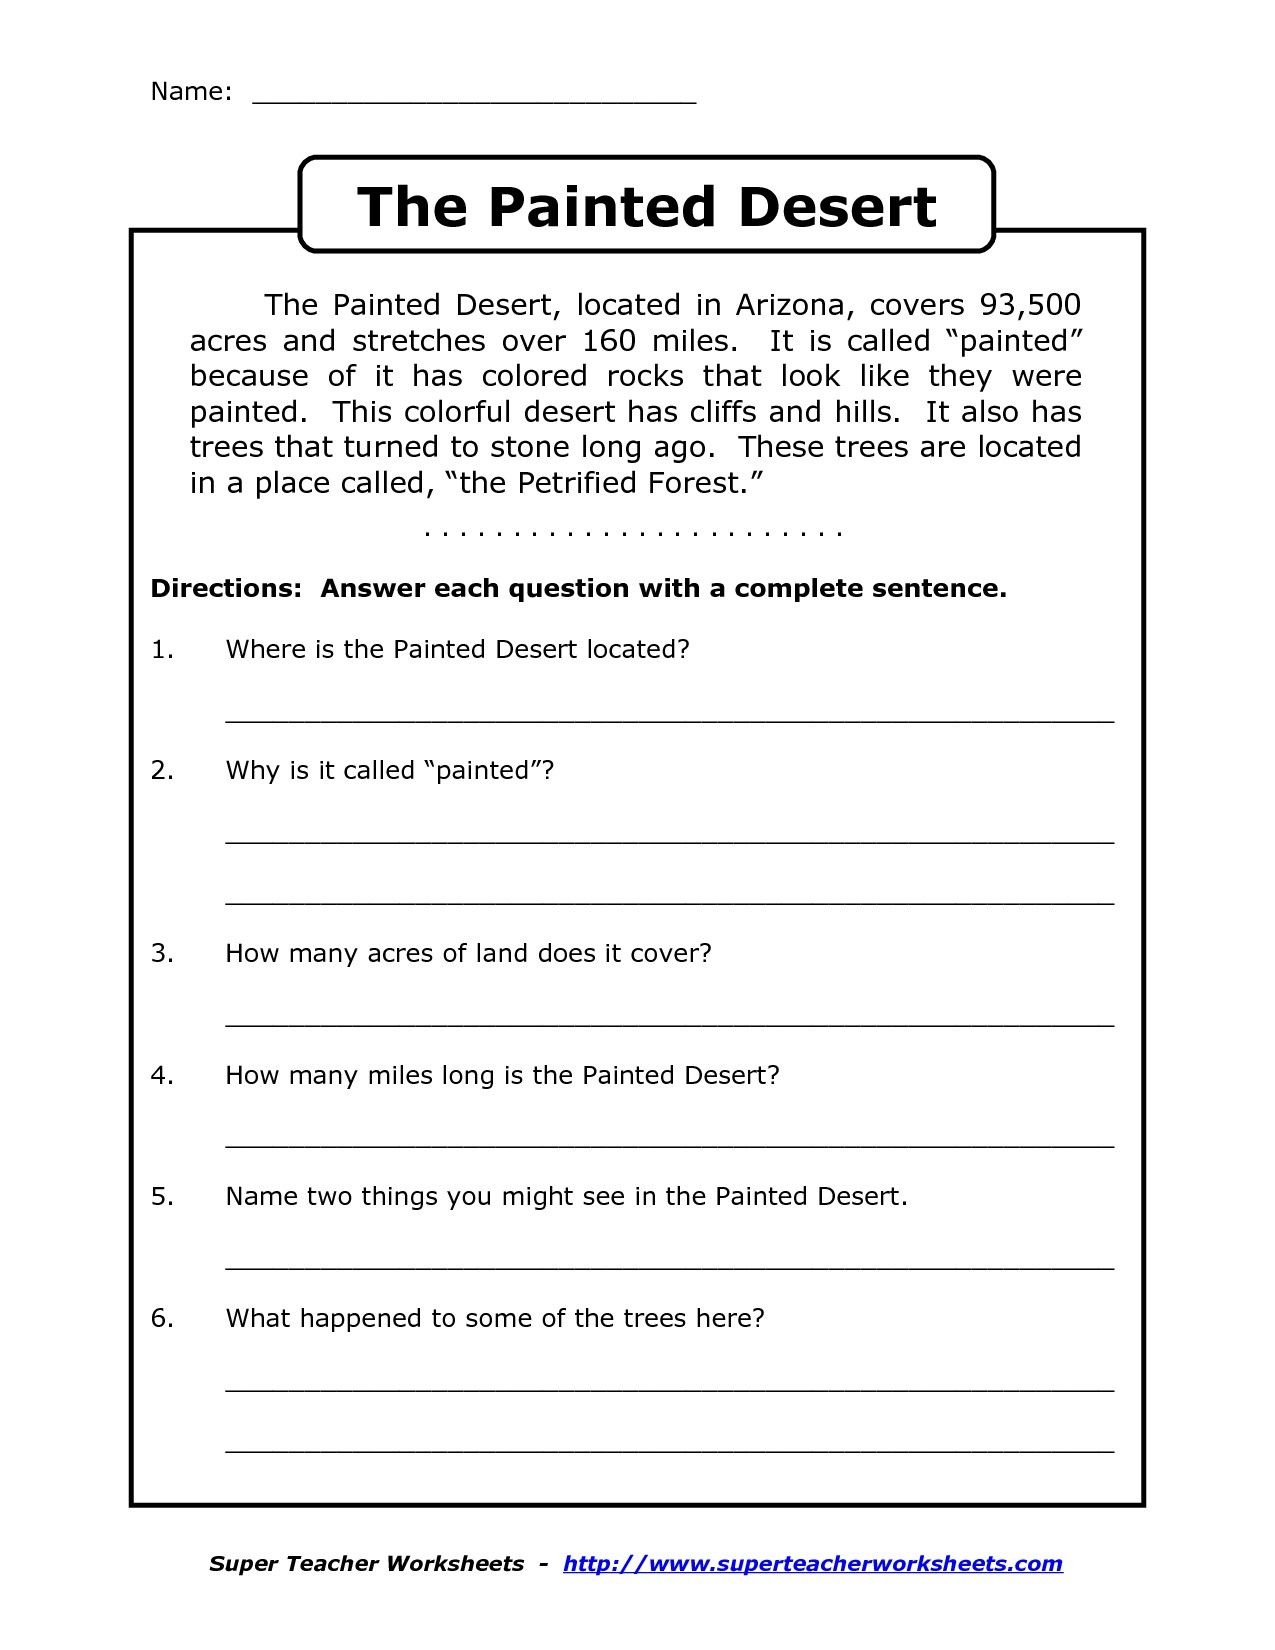 Image Result For Free Printable Worksheets For Grade 4 Comprehension - Free Printable Comprehension Worksheets For Grade 5